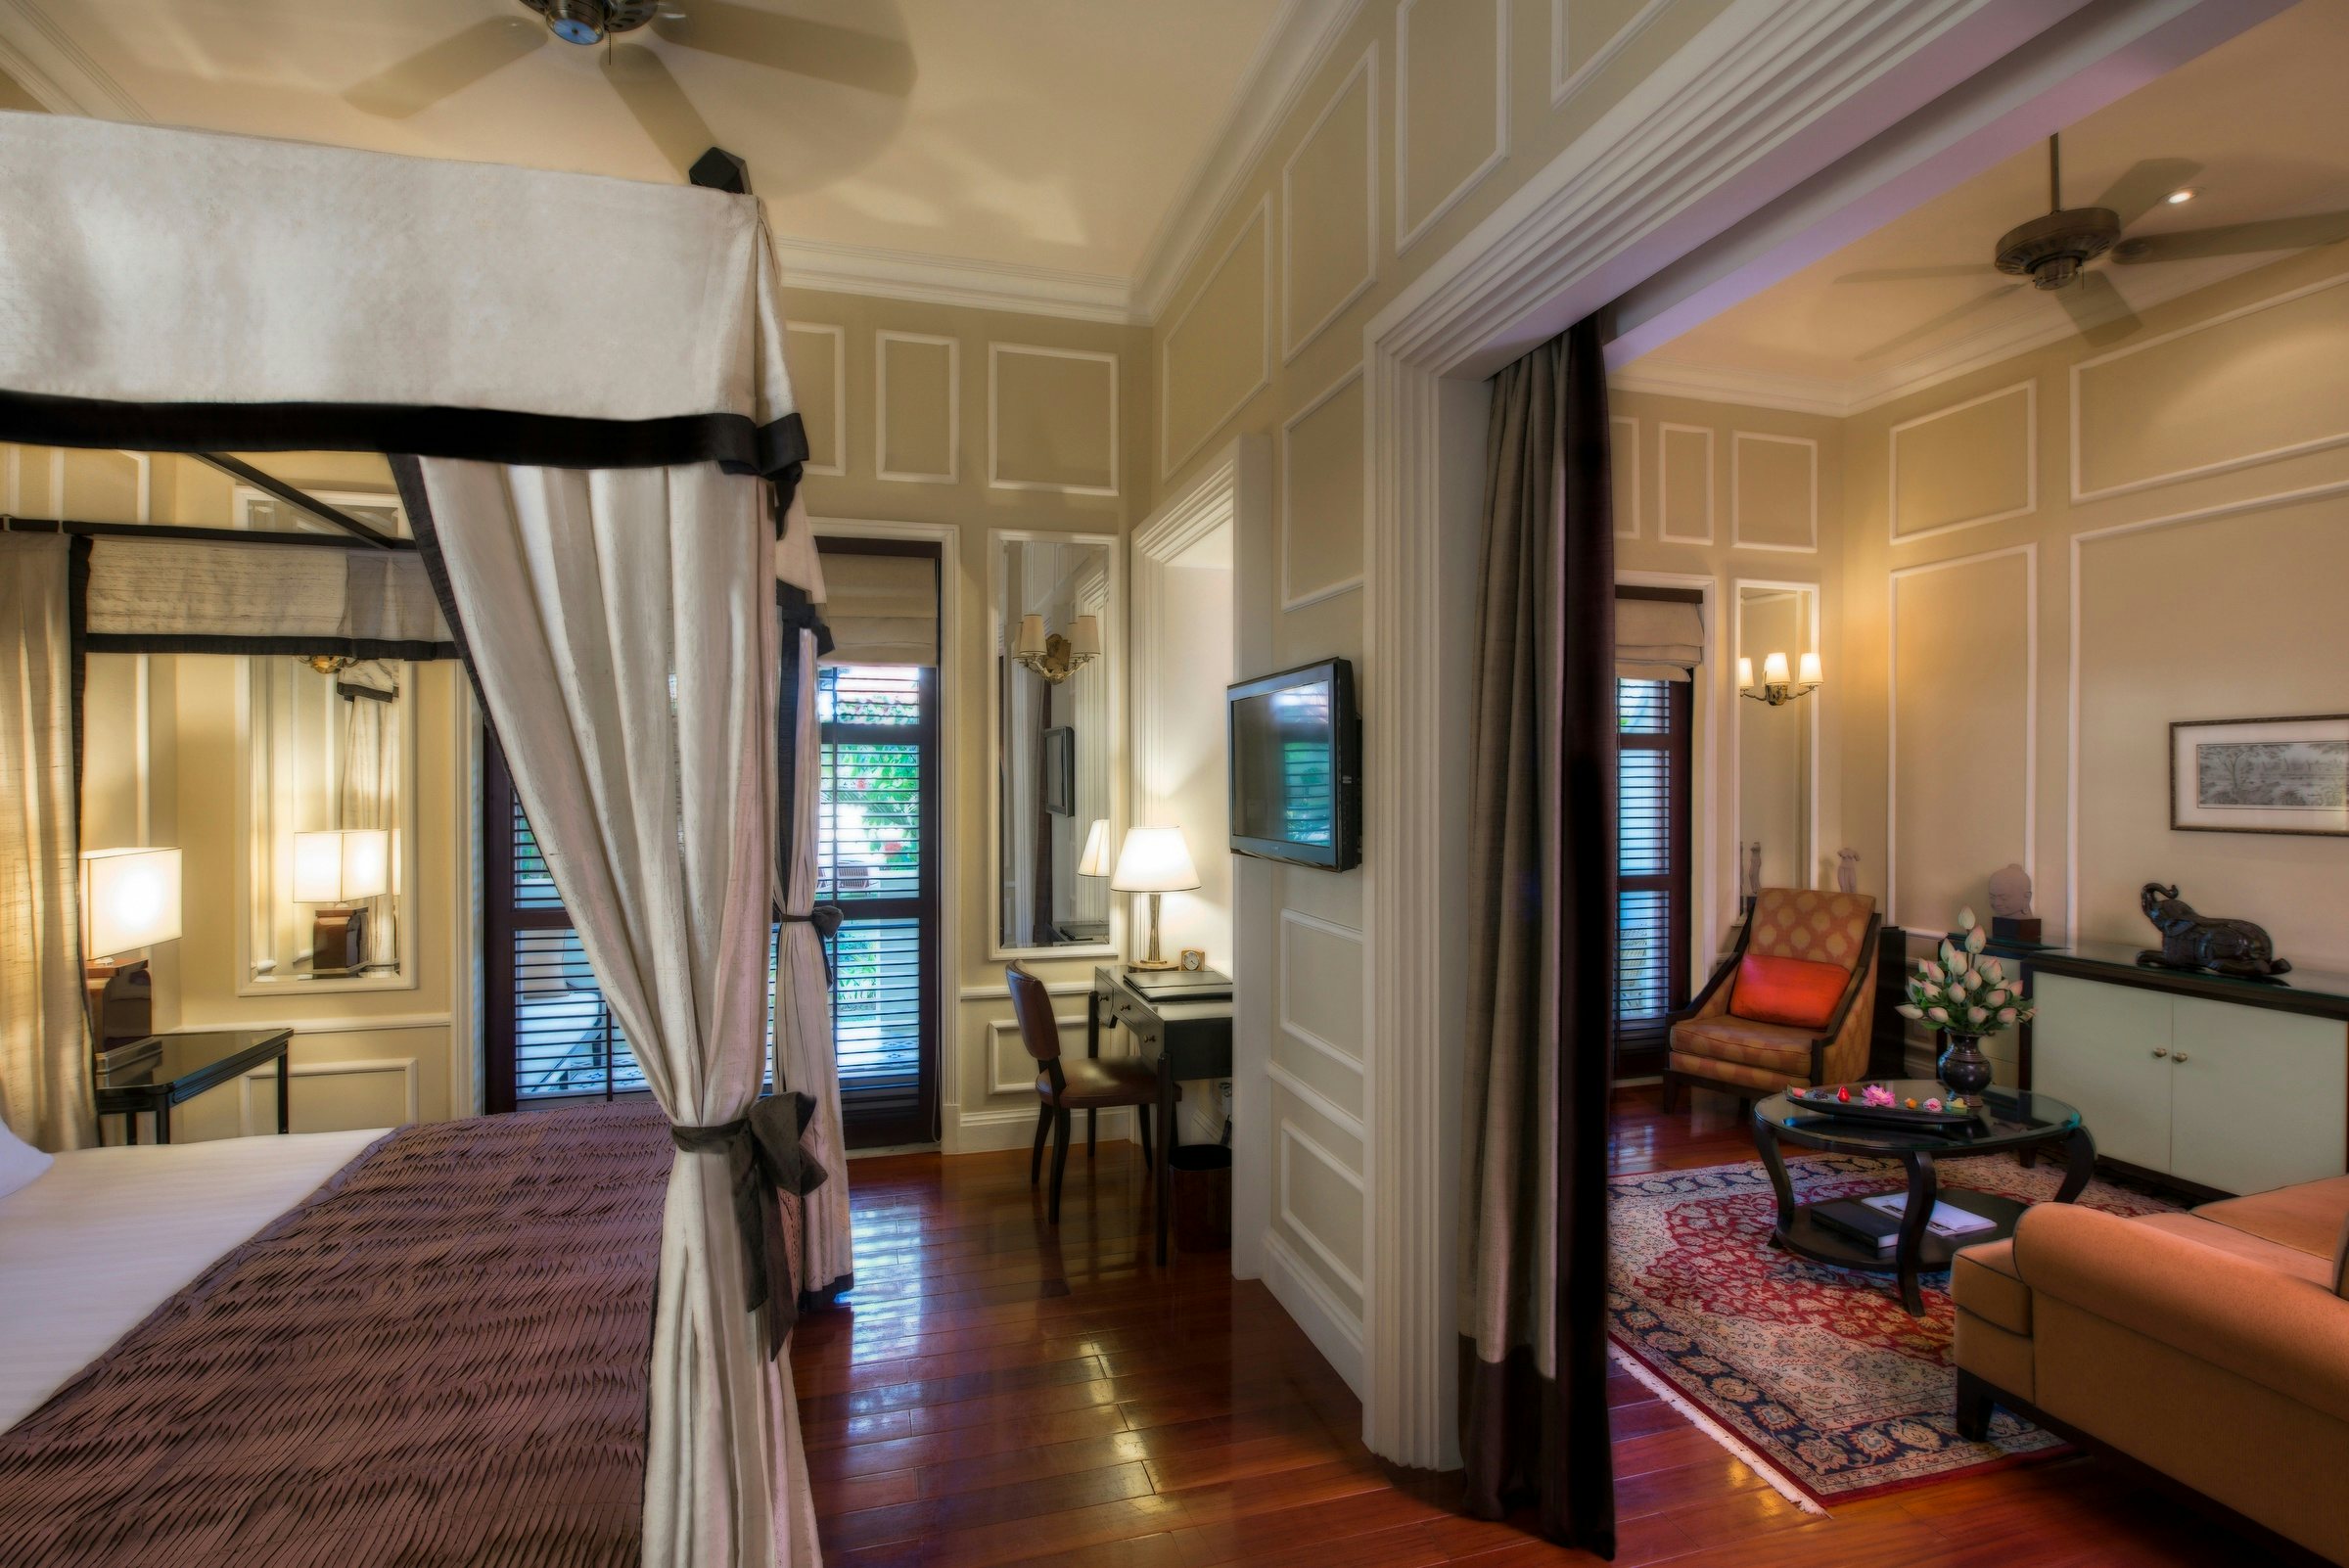 The Cabana Suite at the Raffles Grand Hotel d'Angkor. (Courtesy Photo)